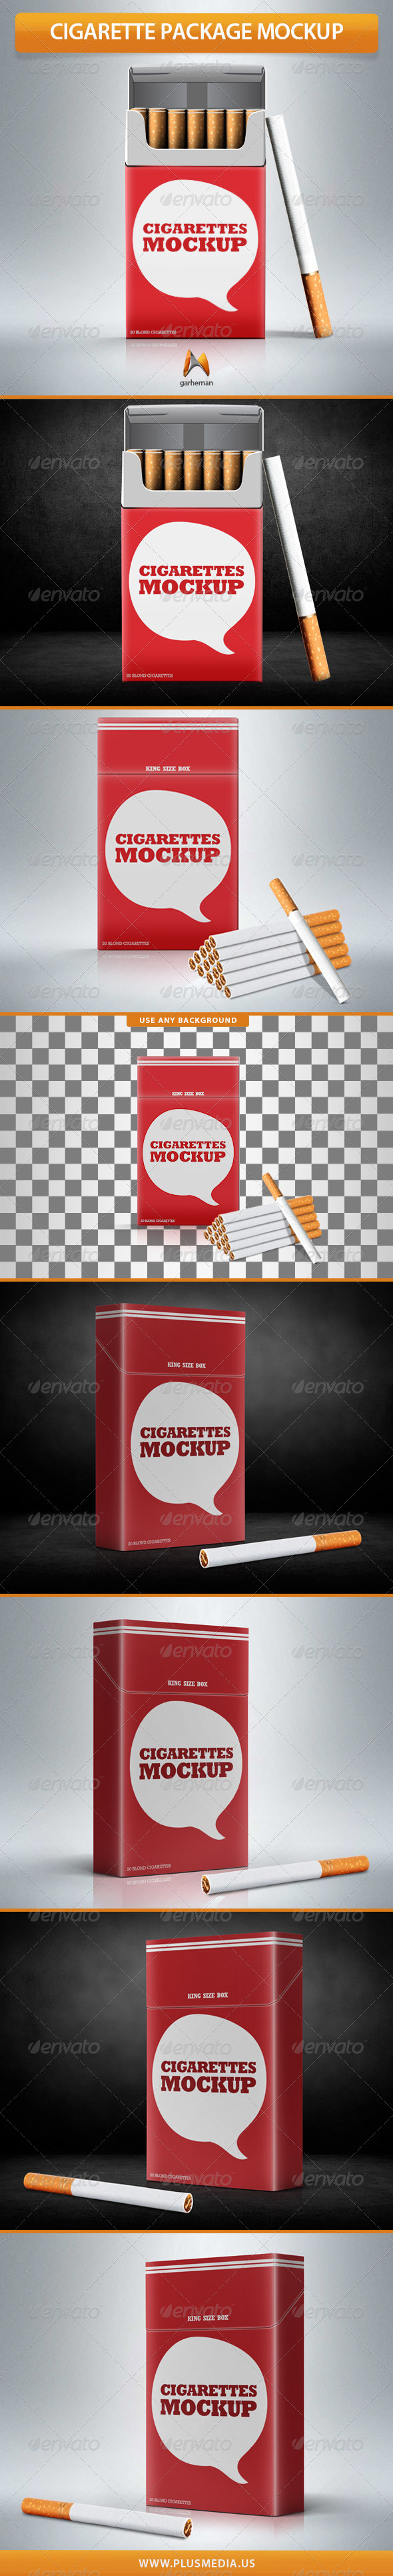 Download Cigarette Package Mock-Up by garhernan | GraphicRiver